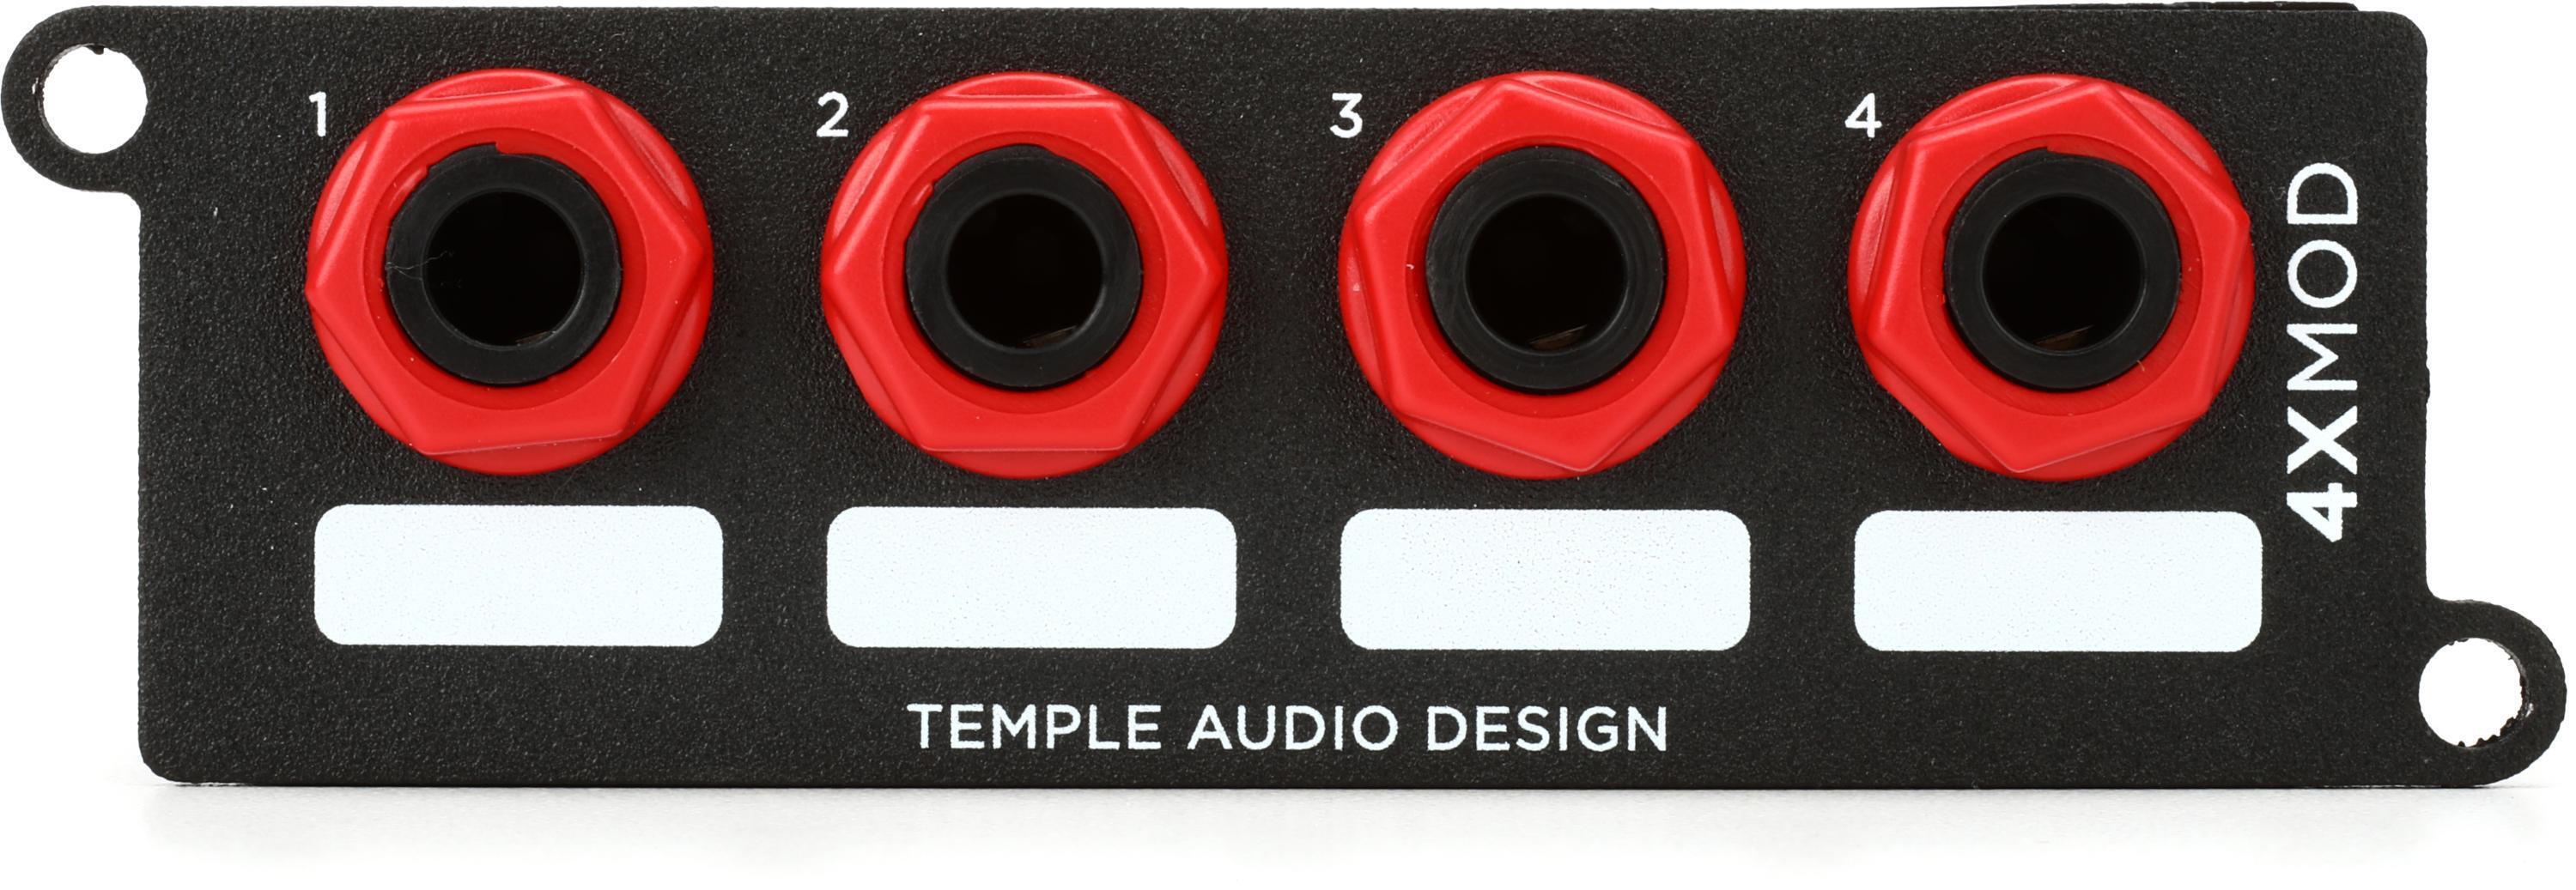 Temple Audio 4-Way Jack Patch Module